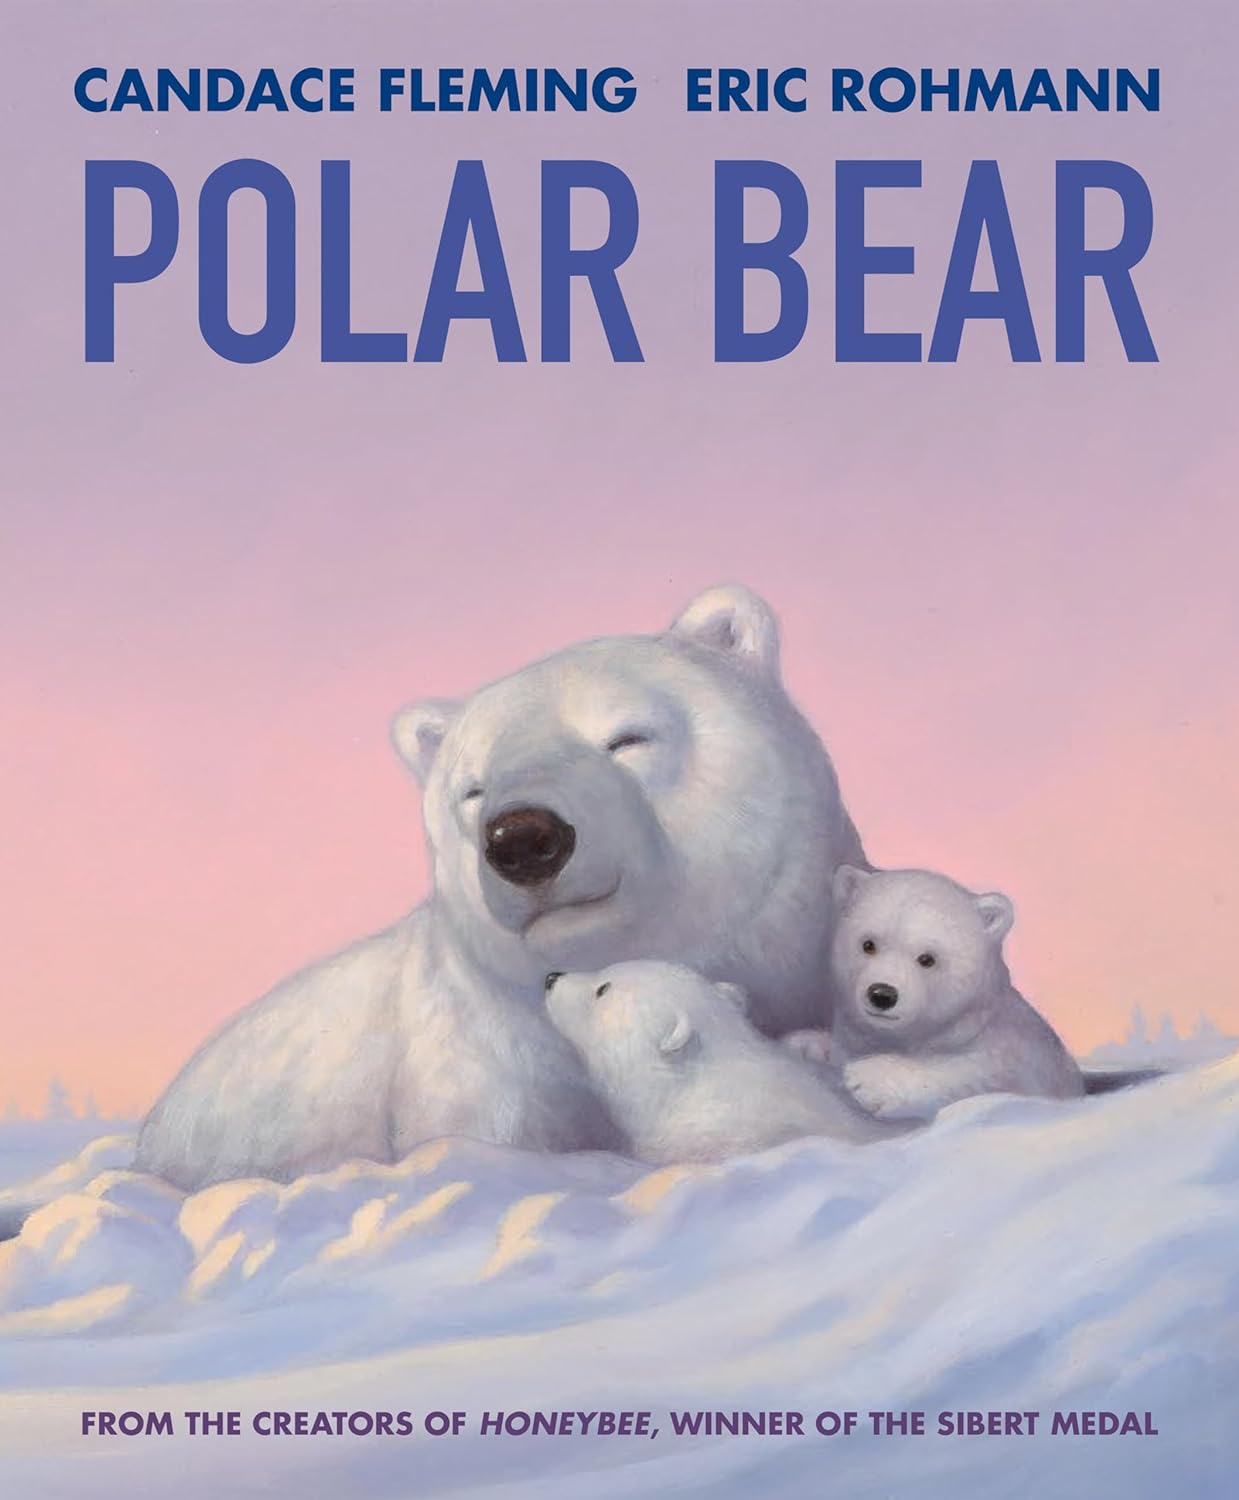 Cover for “Polar Bear”